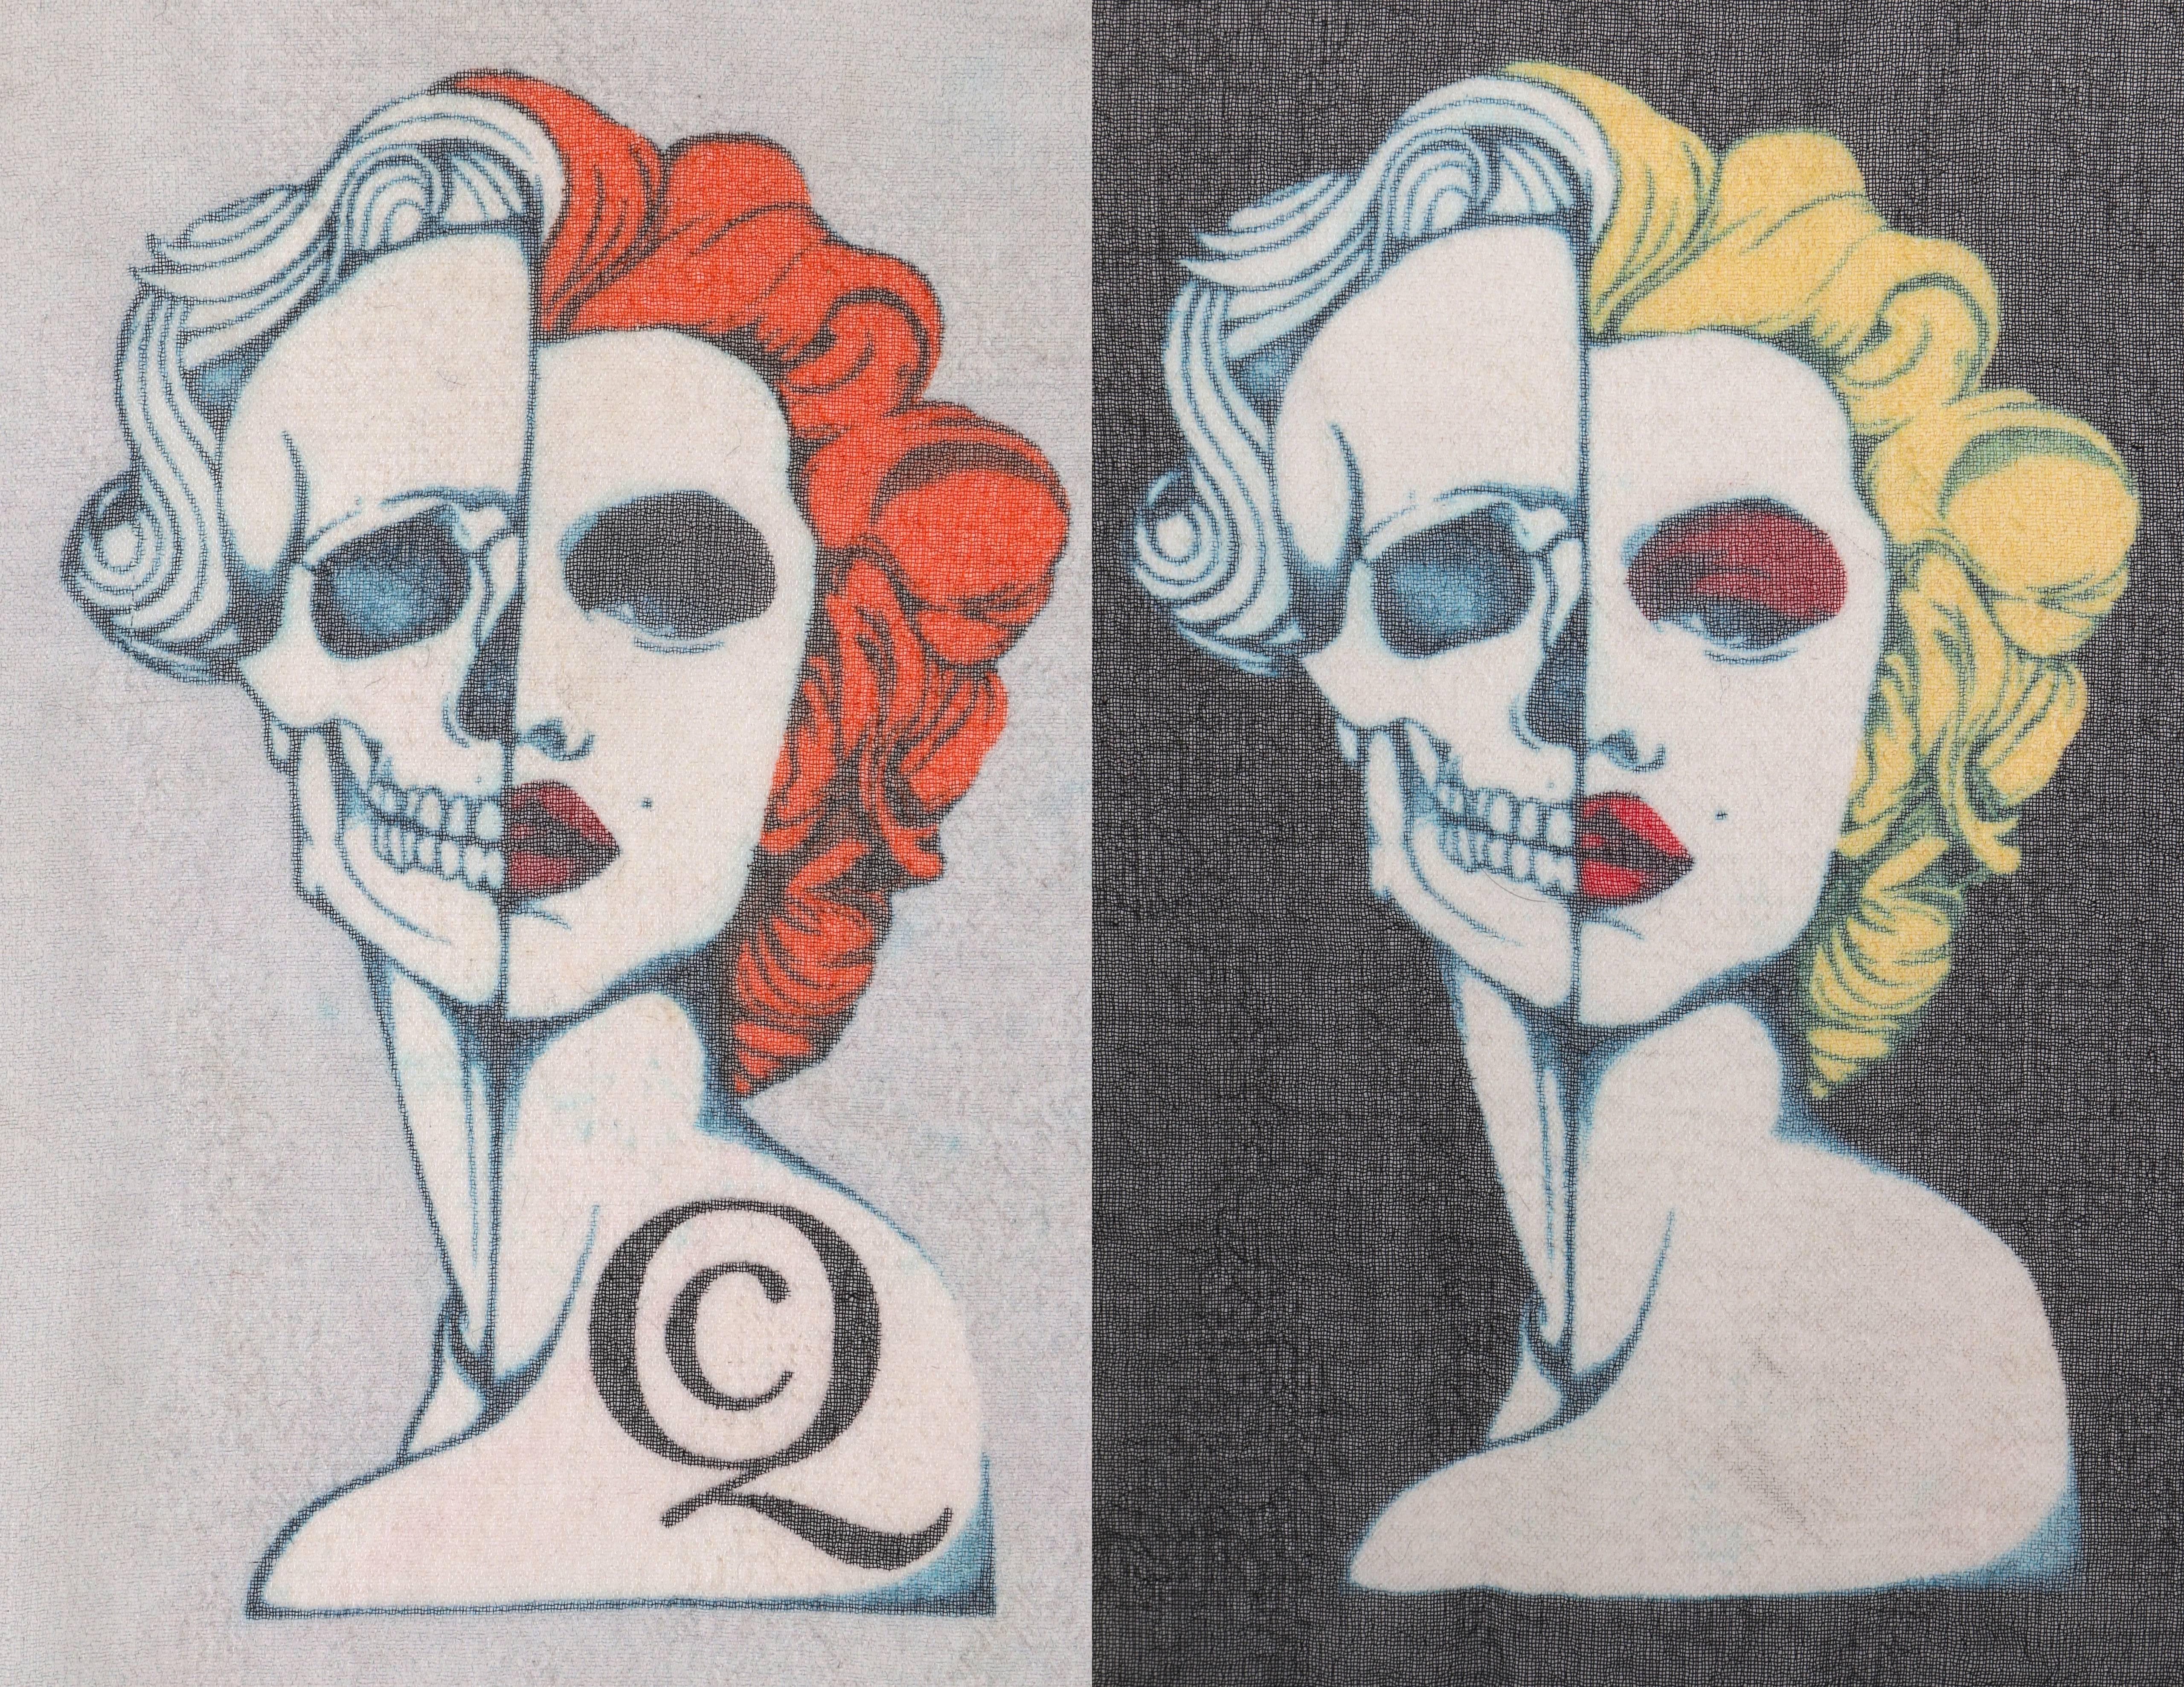 Rare Alexander McQueen c.2008 Marilyn Monroe skull pop art / Warhol inspired silk chiffon scarf. Marilyn Monroe spliced skull graphic centered in multicolored pop art rectangular blocks in shades of red, orange, yellow, green, black, and white. CQ